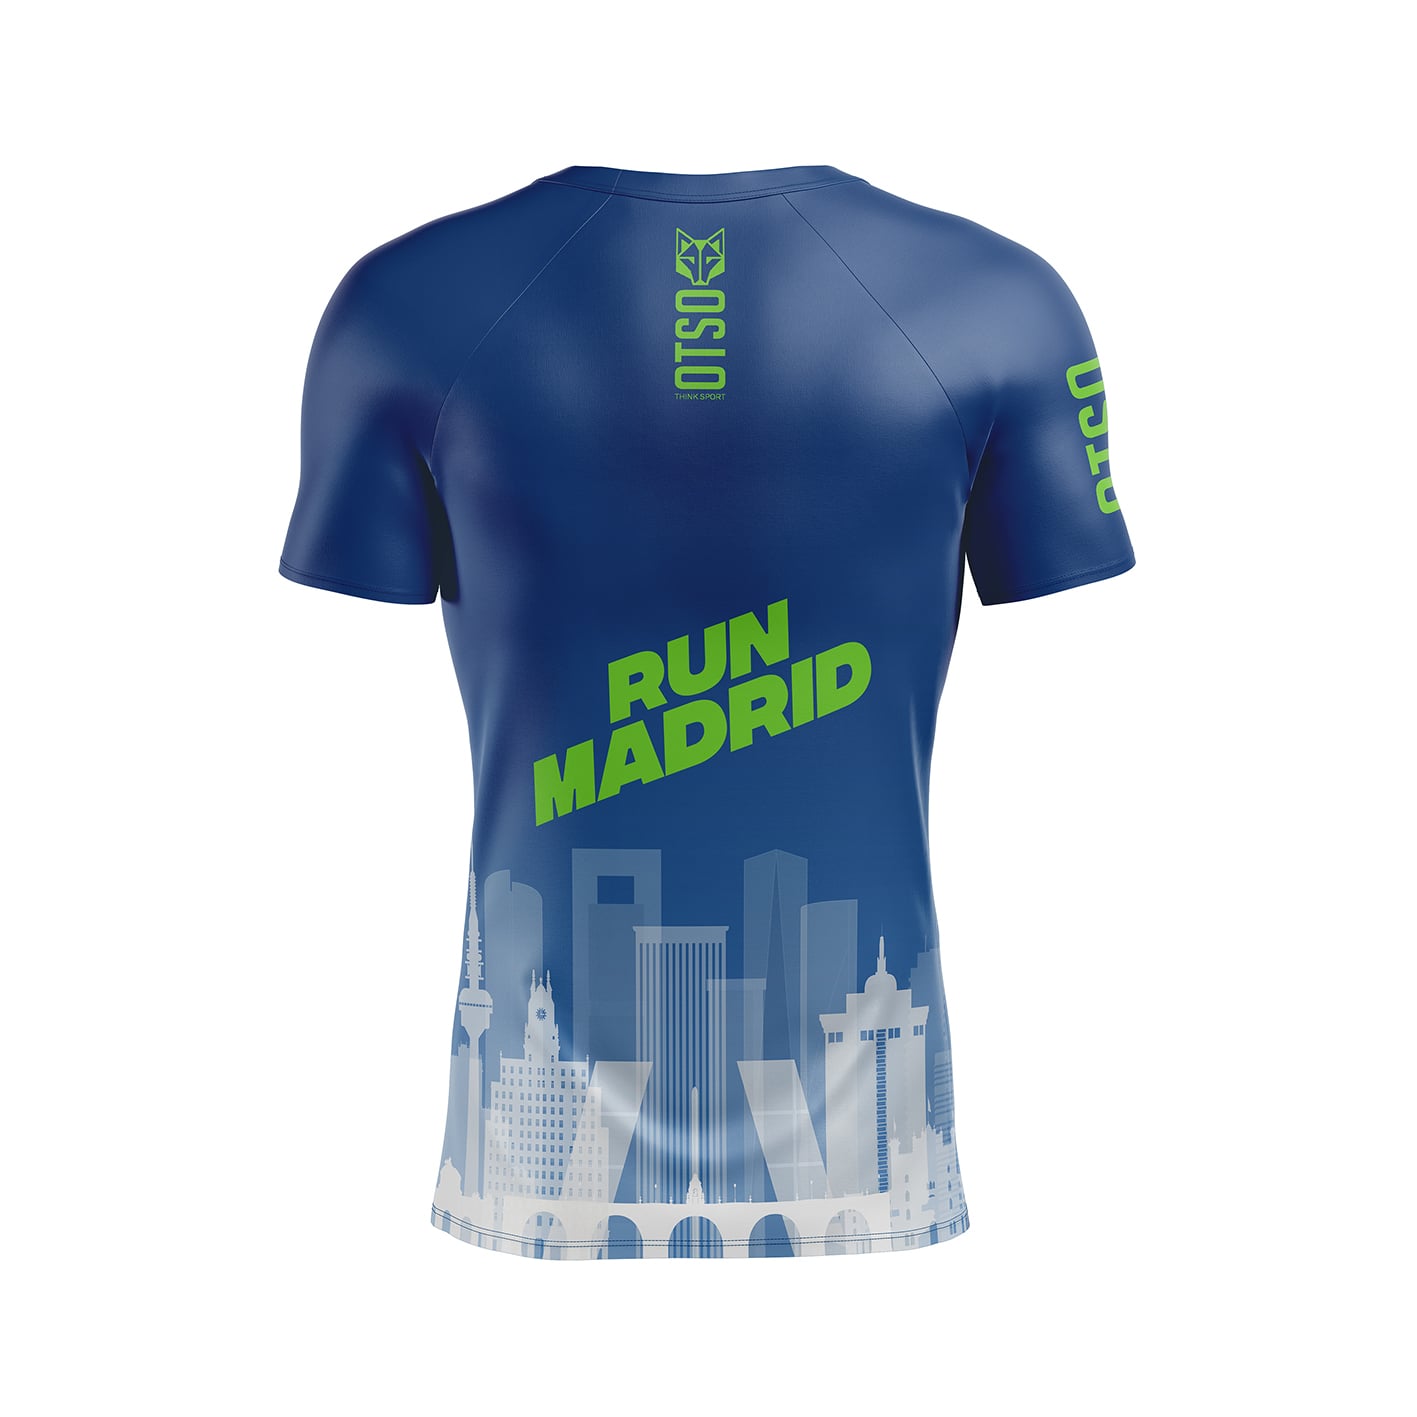 Camiseta manga corta hombre - Run Madrid Tio Pepe (Outlet)